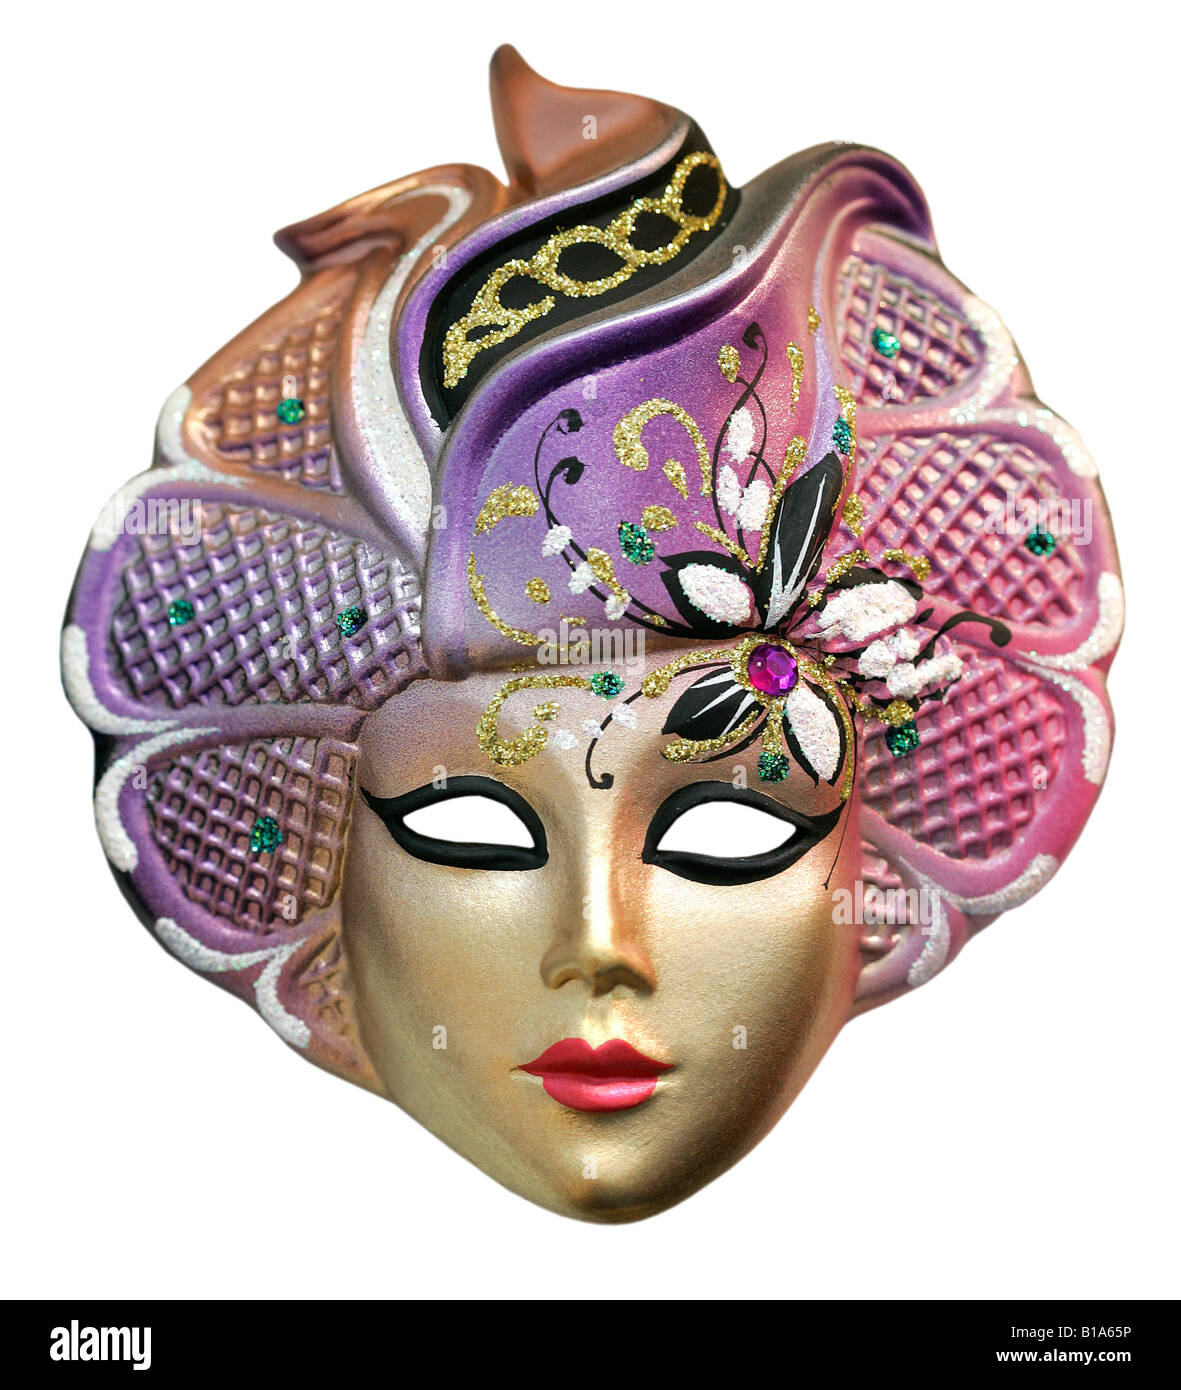 Italian mask Venetian festival carnival Italy masquerade disguise visor ...